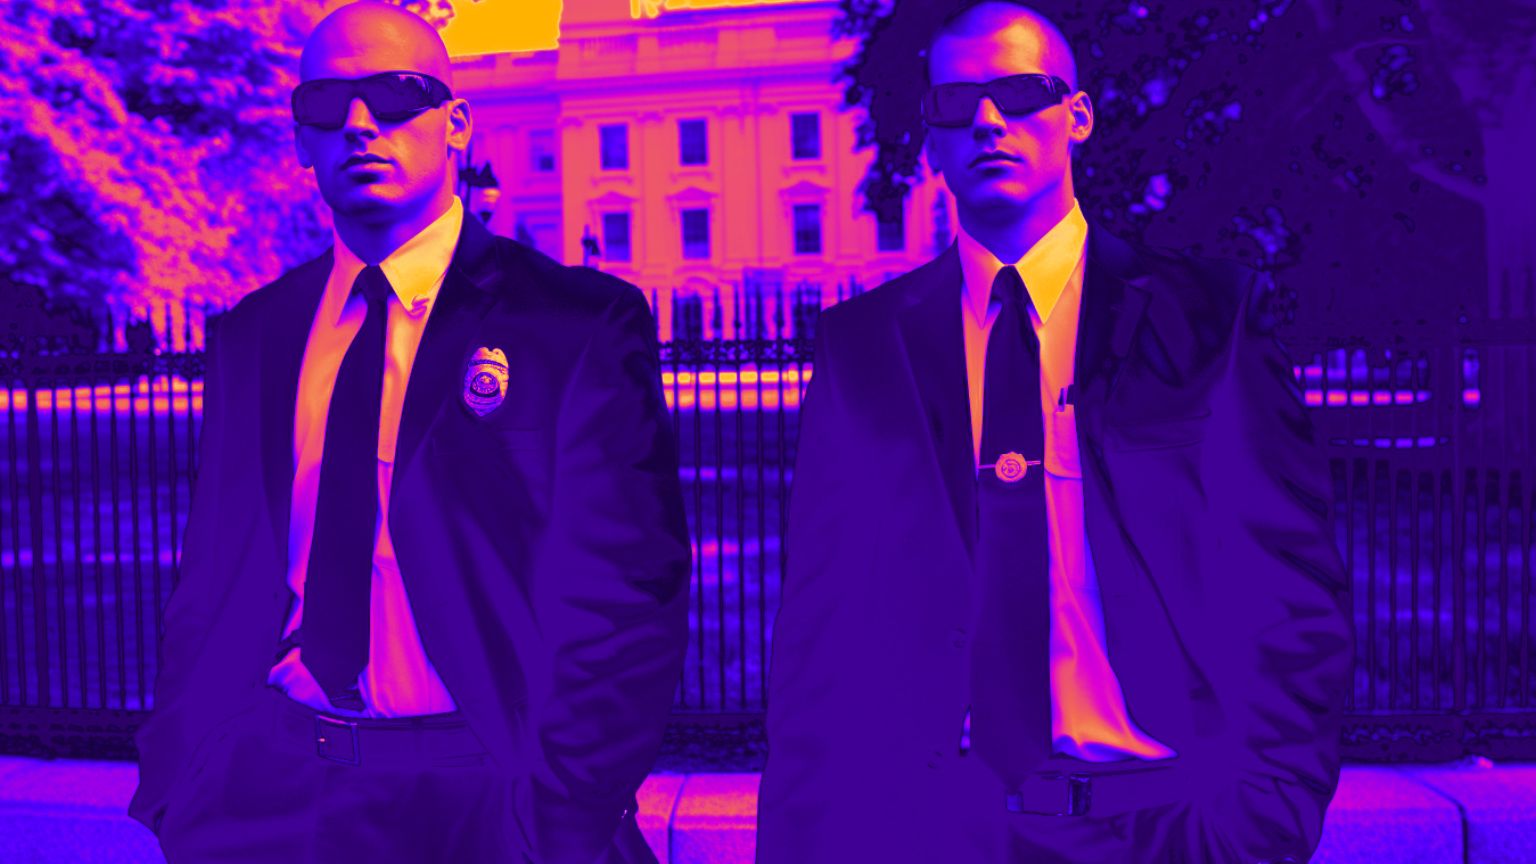 Documents show Secret Service surveilled OnlyFans, Pinterest